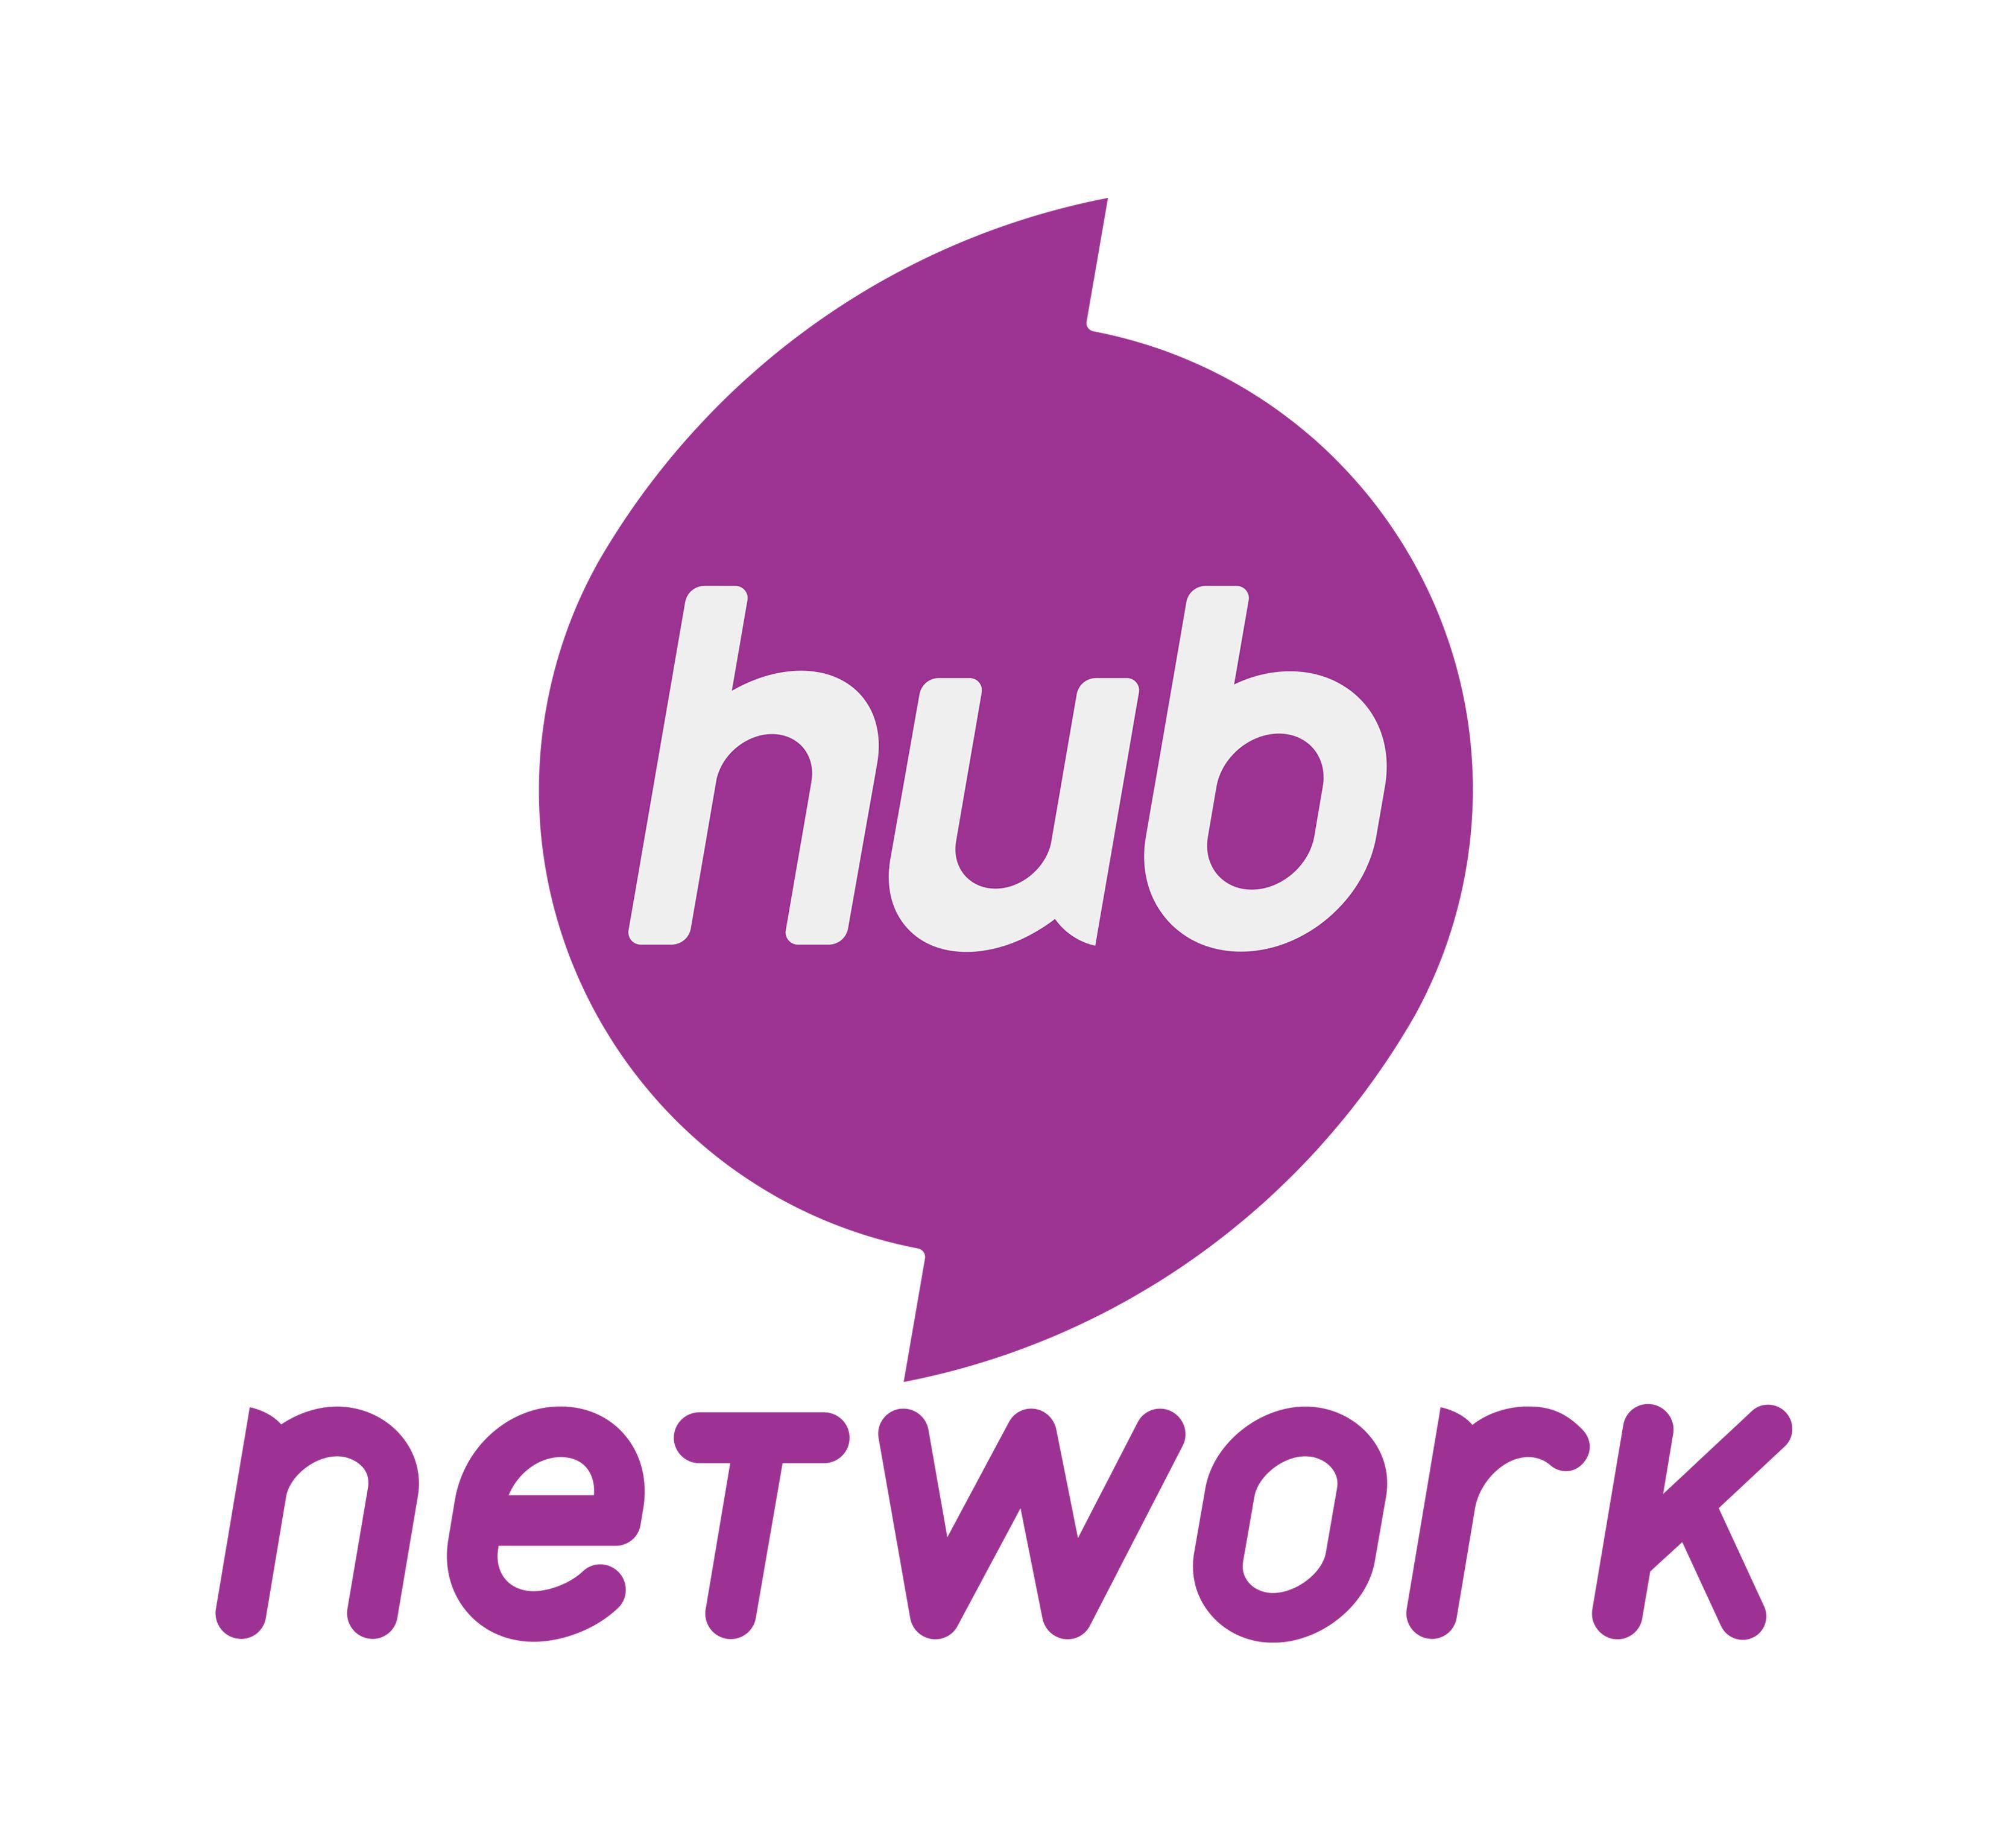 Hub Network Logo - The Hub Network Info : Discovery Press Web